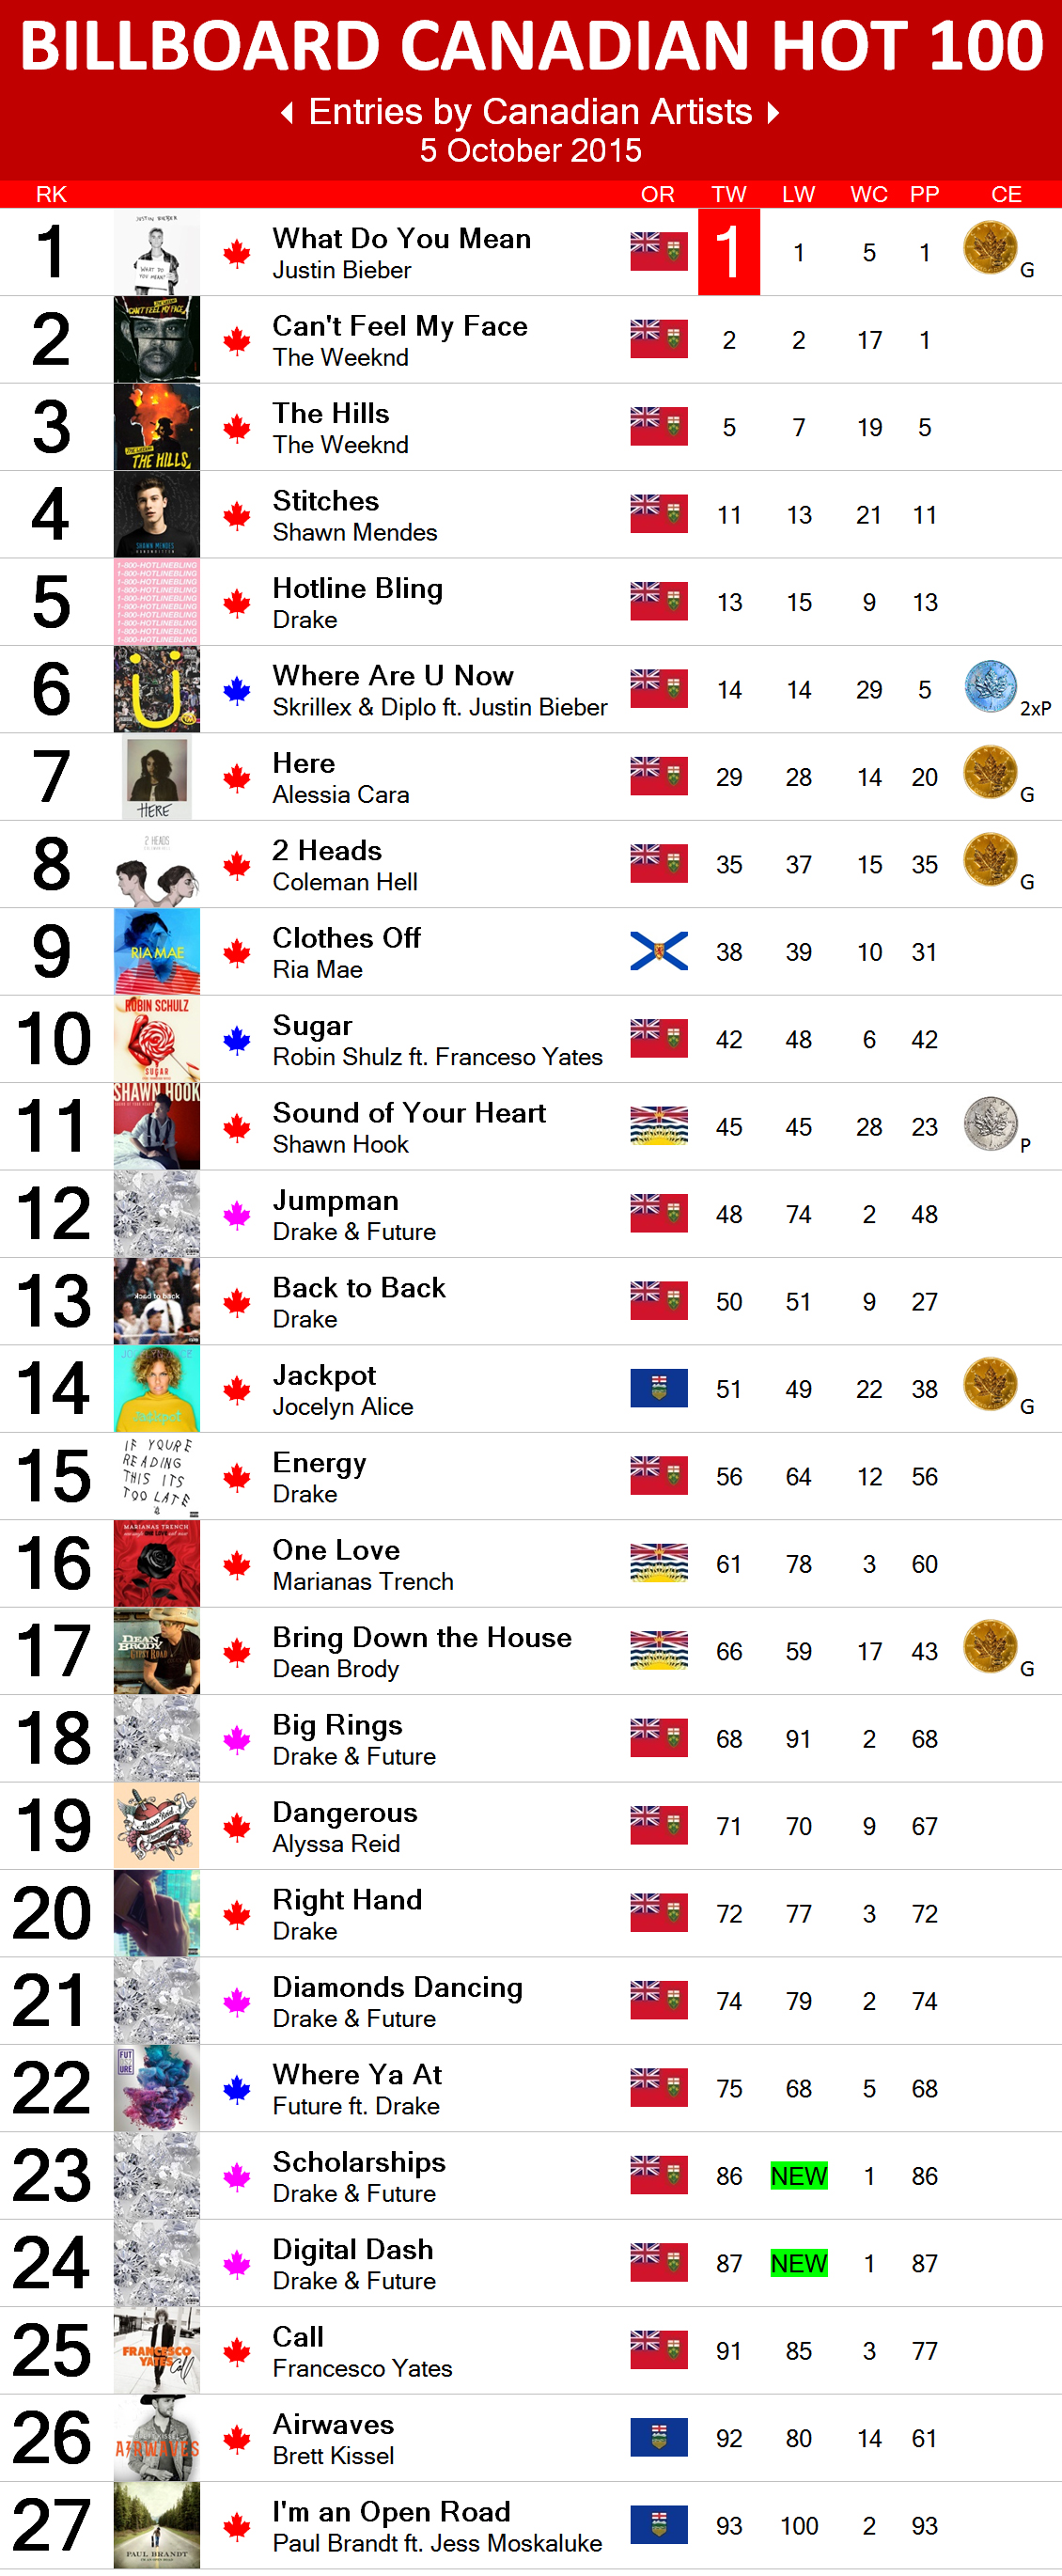 Top 100 Charts 2013